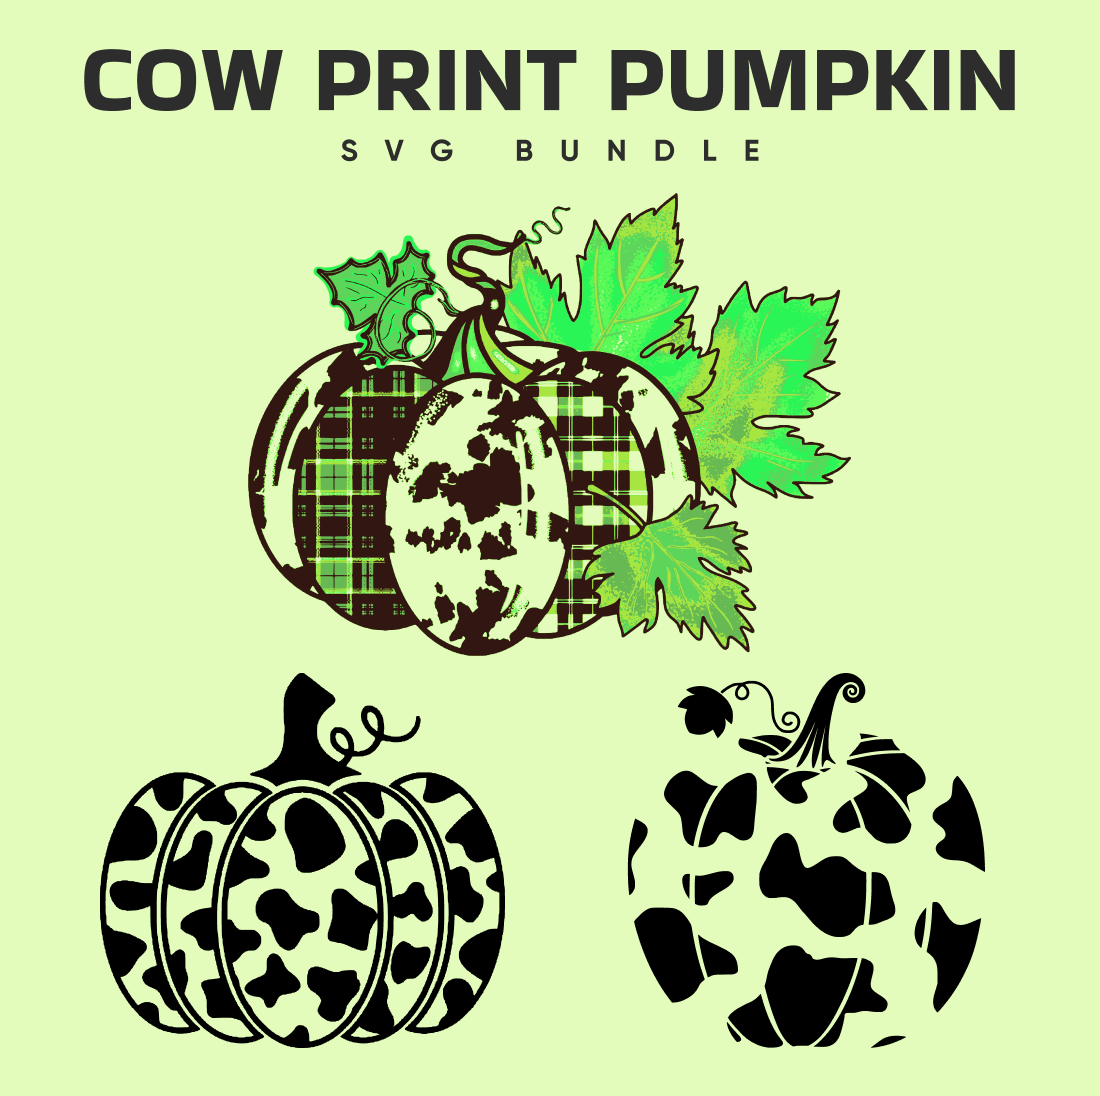 Cow print pumpkin svg bundle.